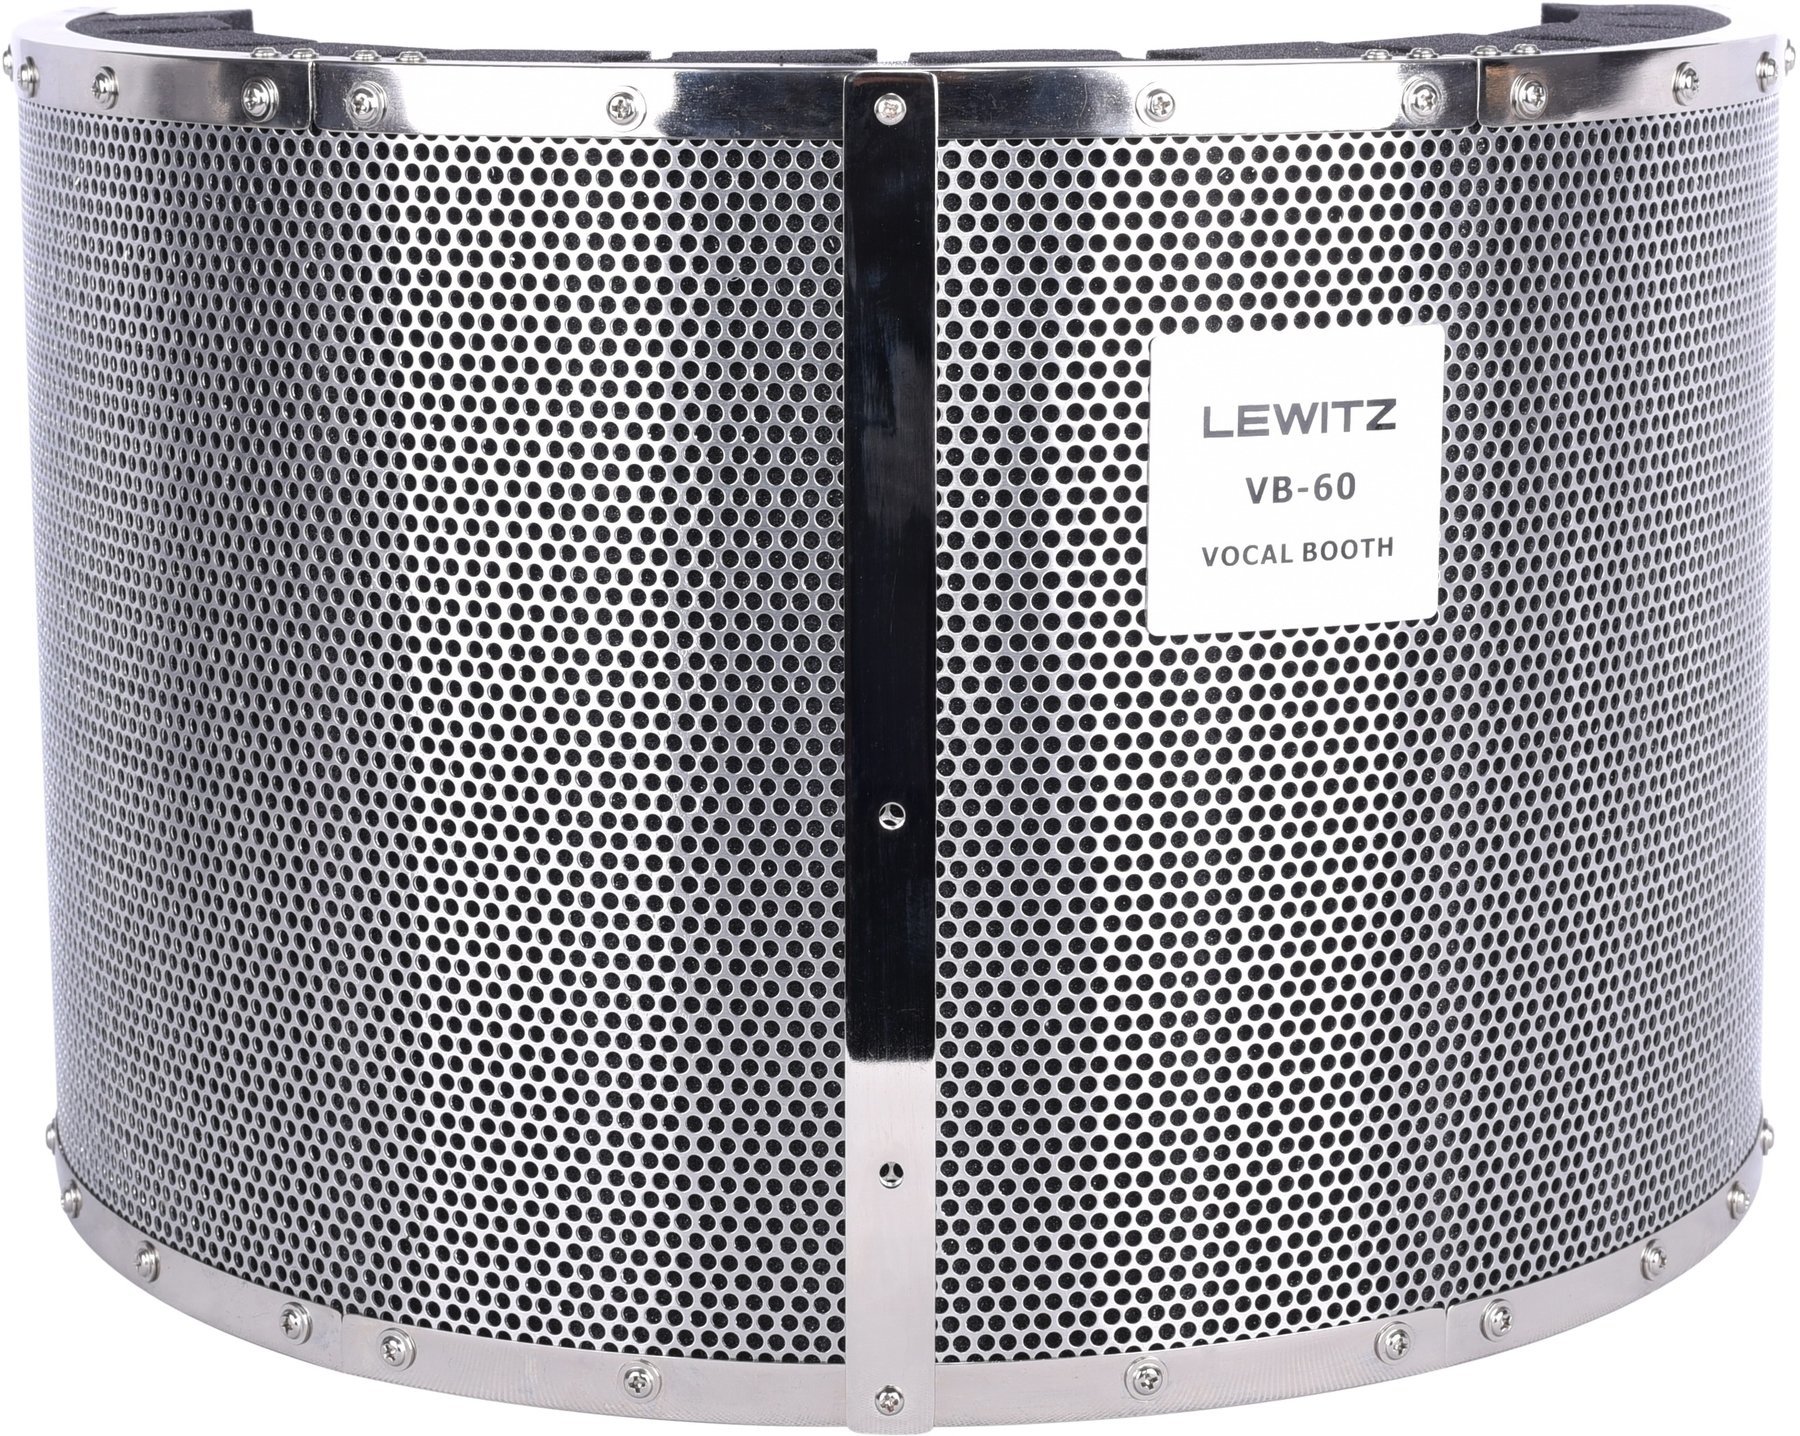 Portable acoustic panel Lewitz VB-60